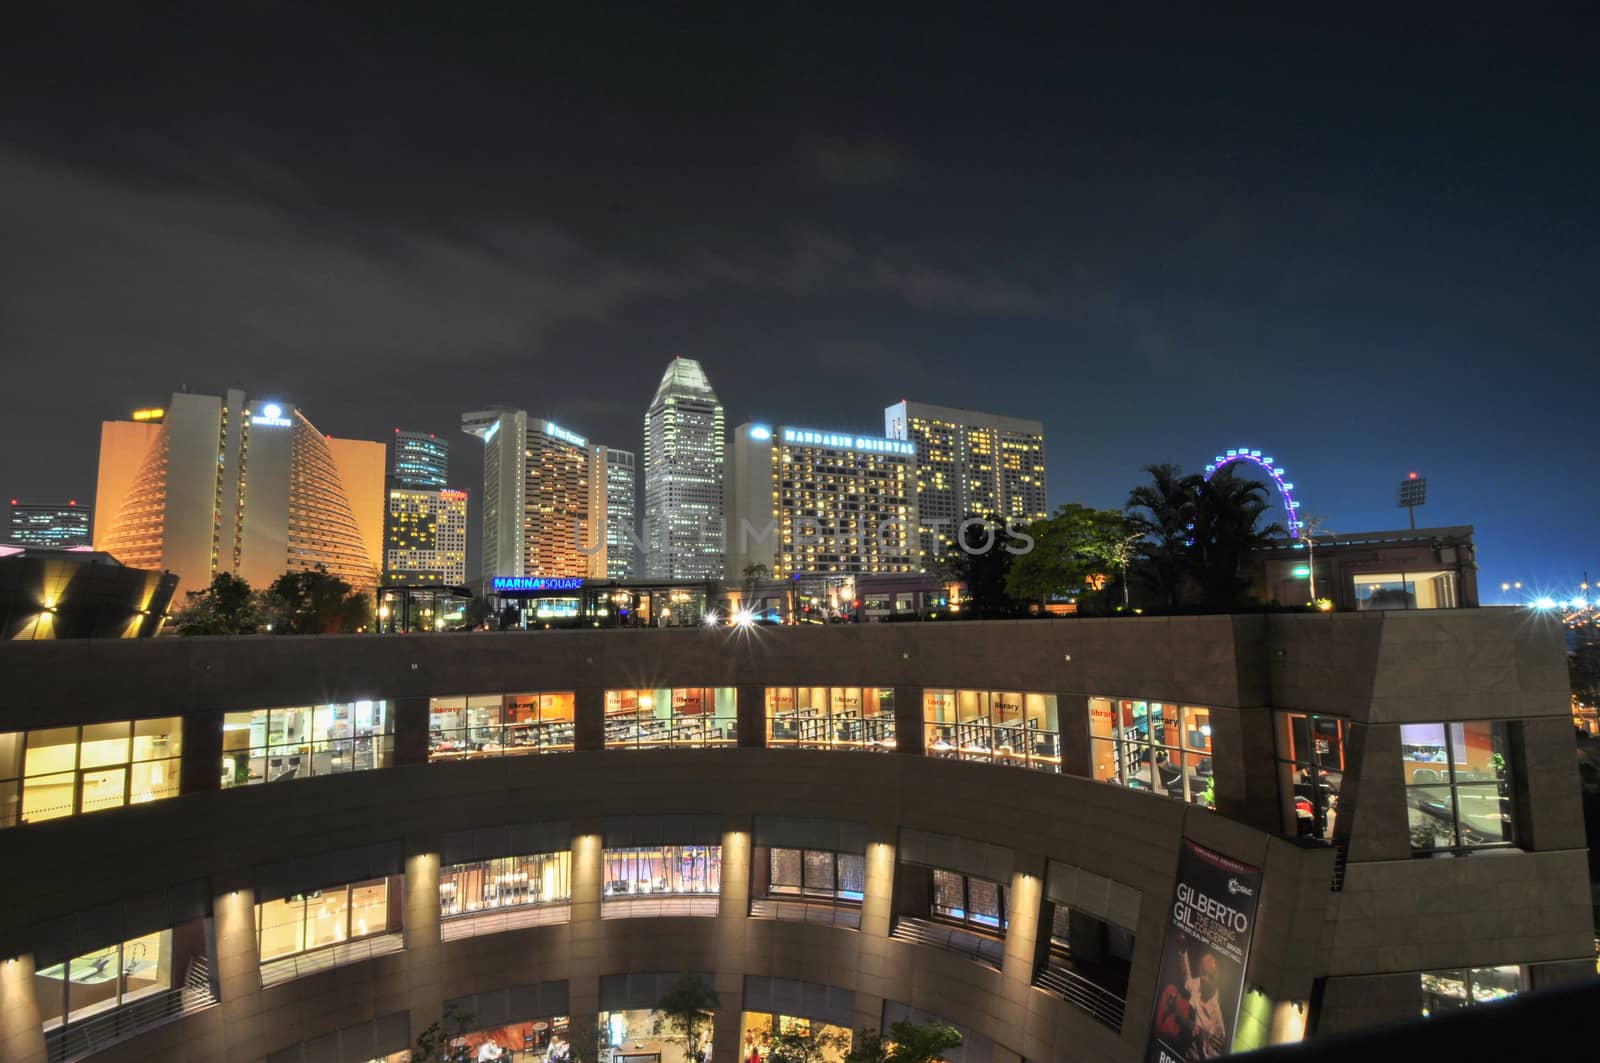 Singapore city skyline finacial district by weltreisendertj